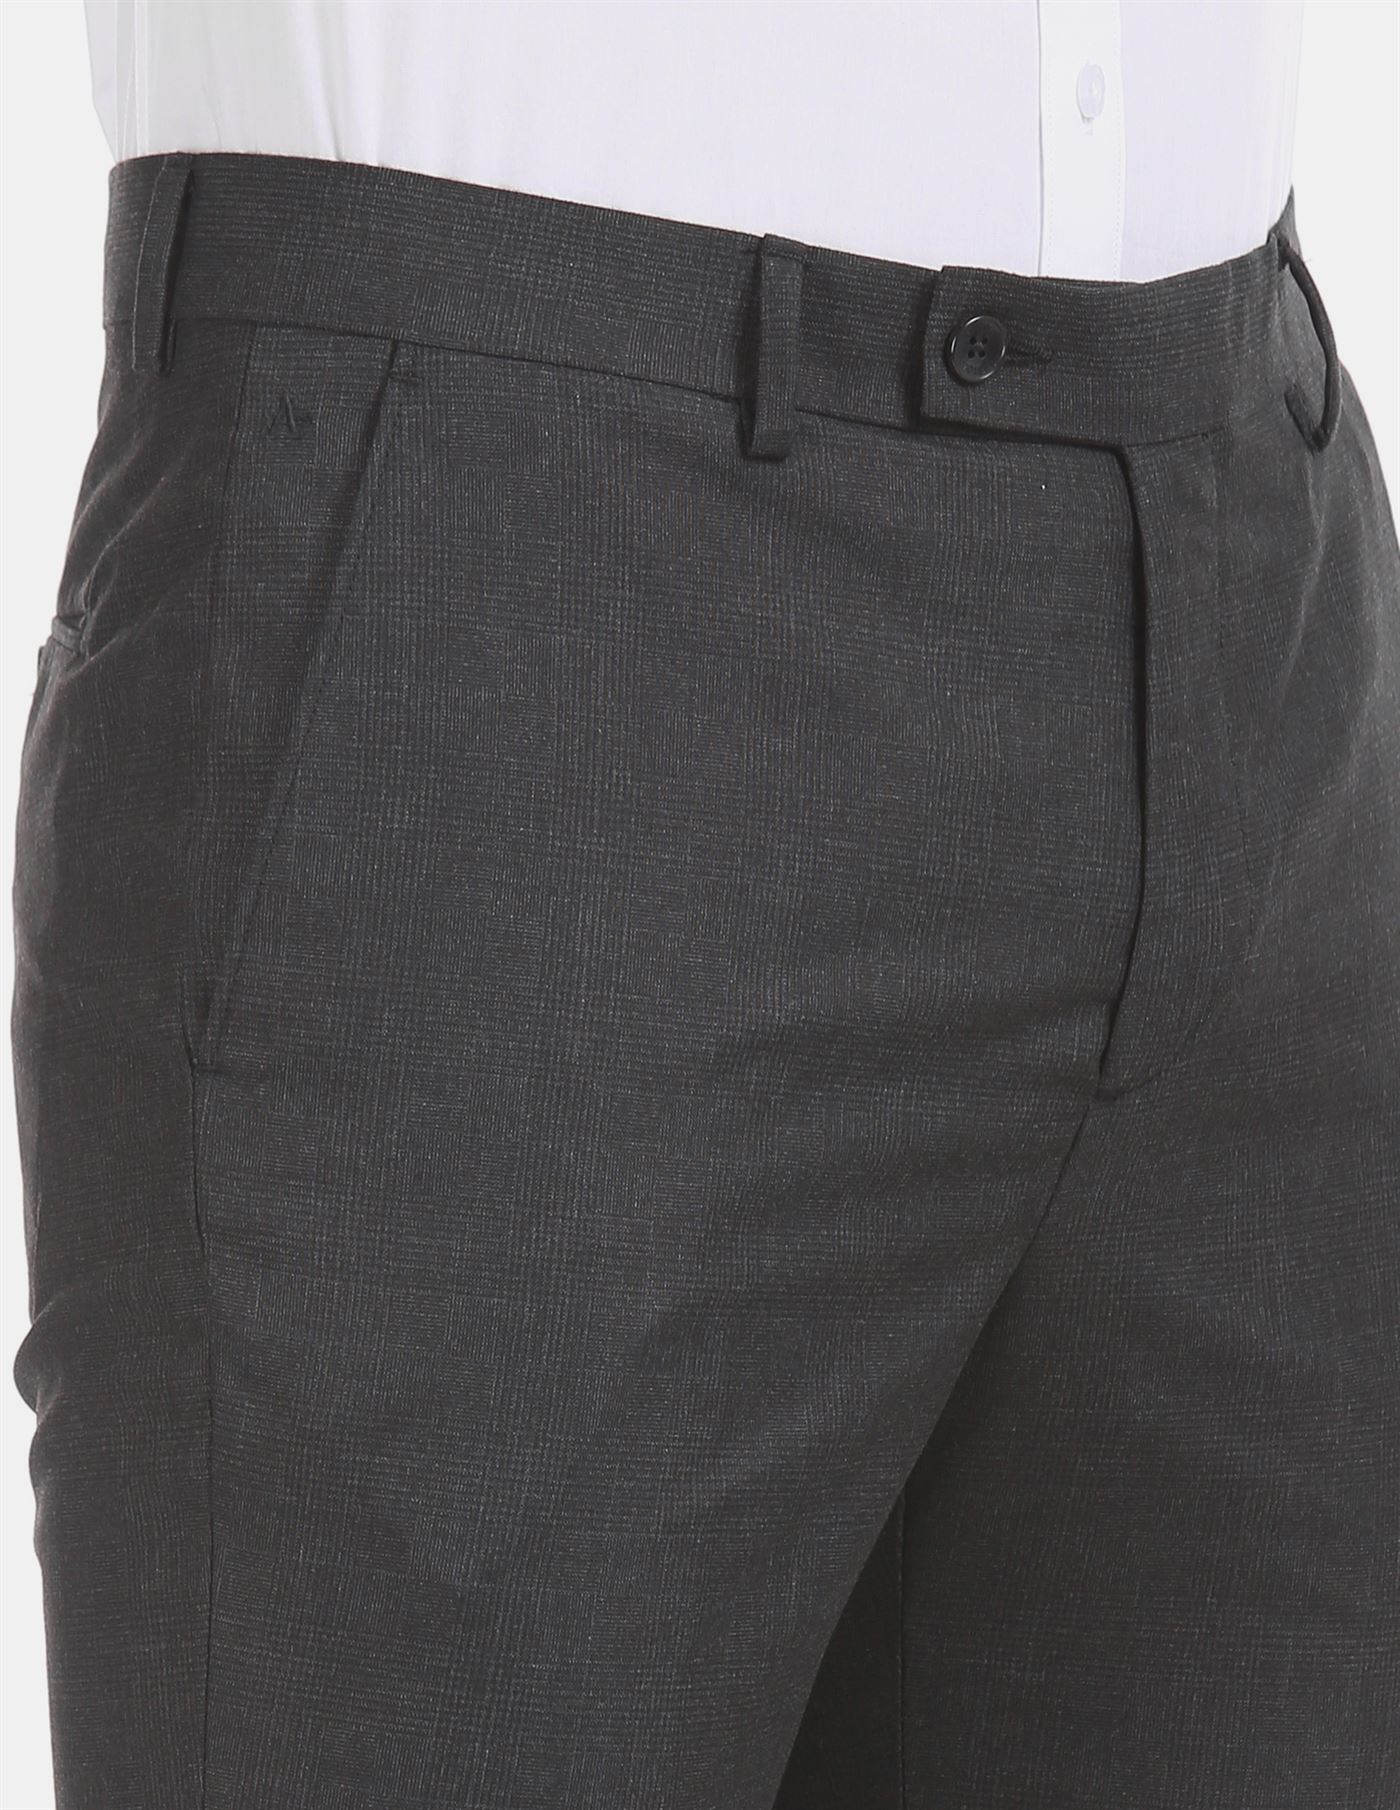 Buy Arrow Men's Regular Pants (ARADOTR2250_Black_30) at Amazon.in